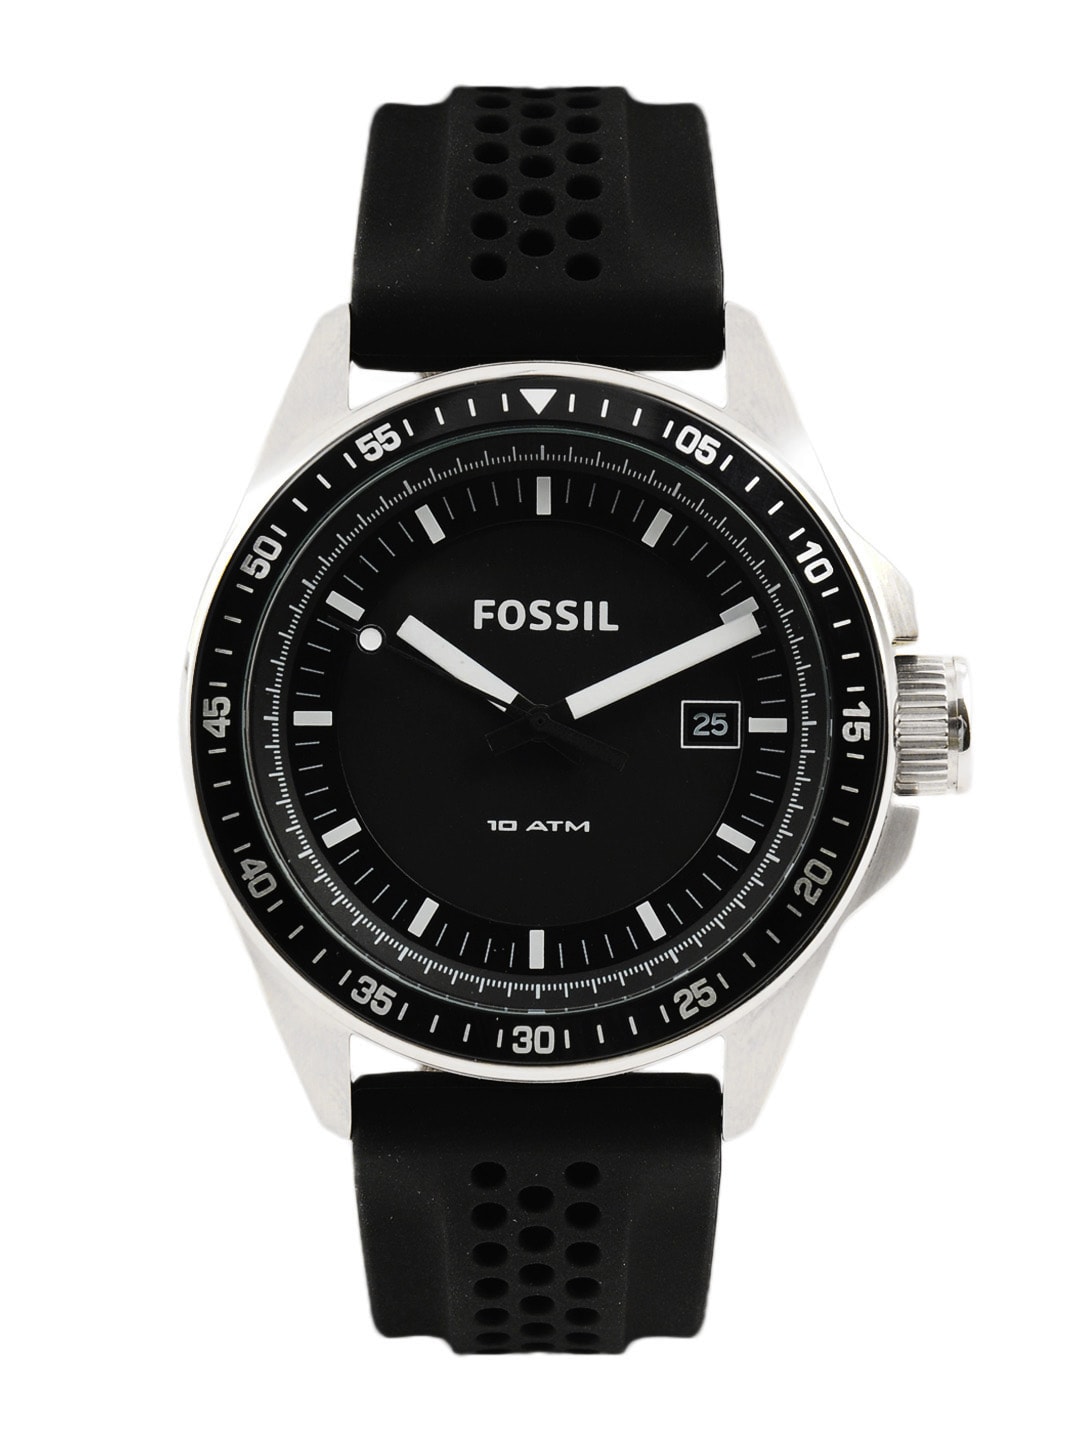 Fossil Men Black Dial Watch AM4384